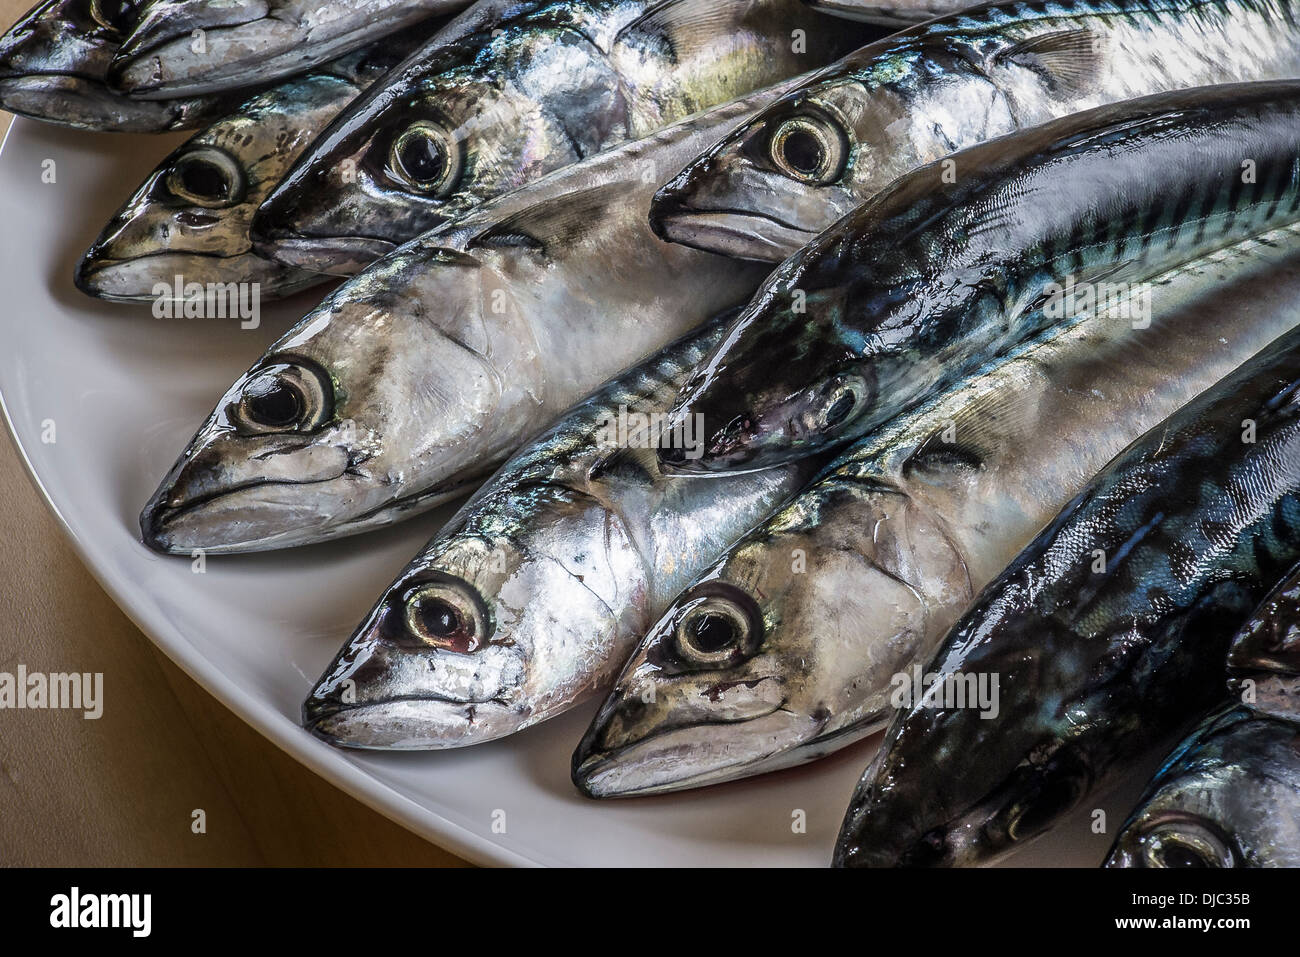 Plate of freshly caught mackerel fish Stock Photo